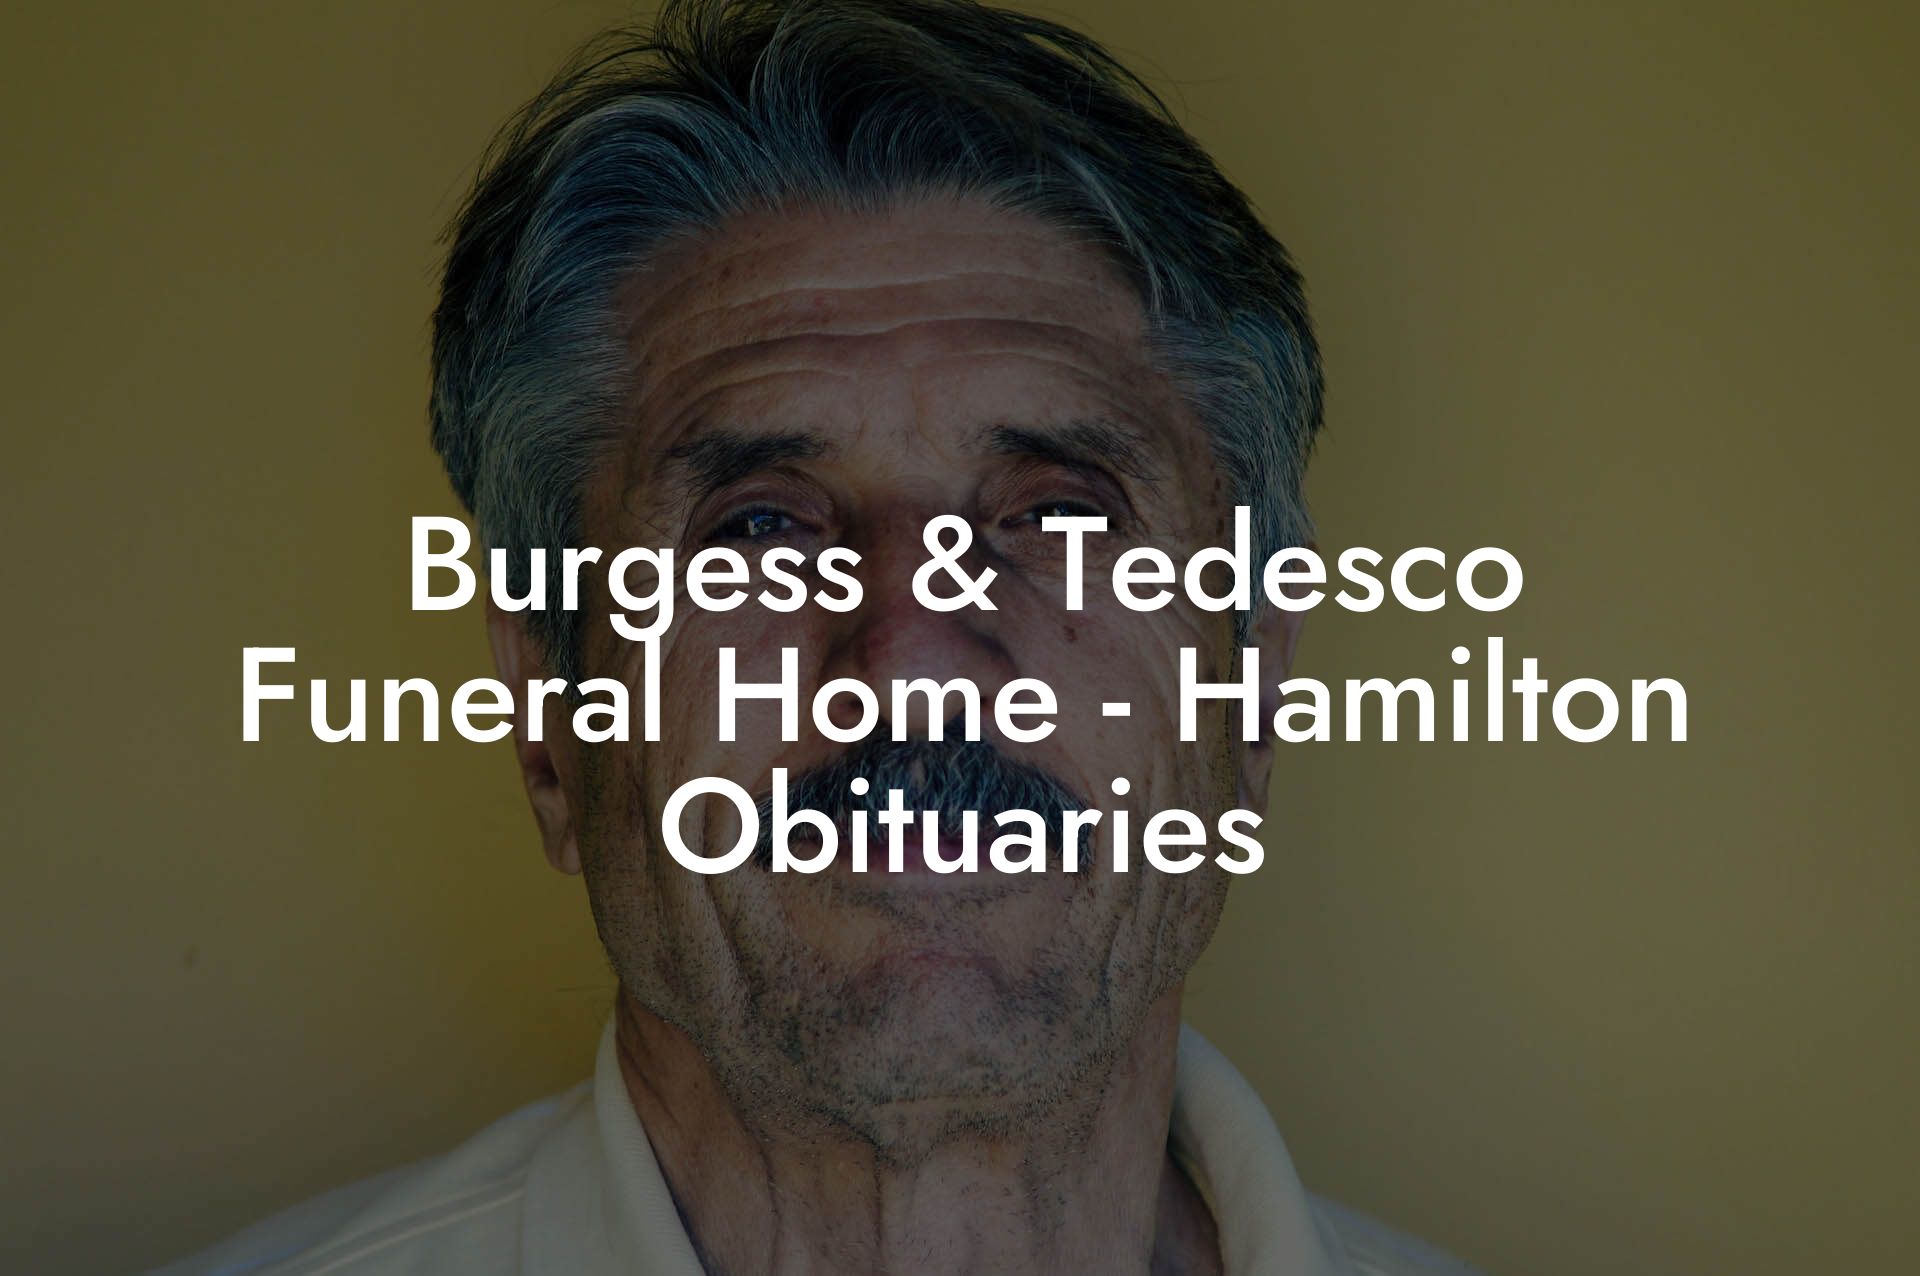 Burgess & Tedesco Funeral Home - Hamilton Obituaries